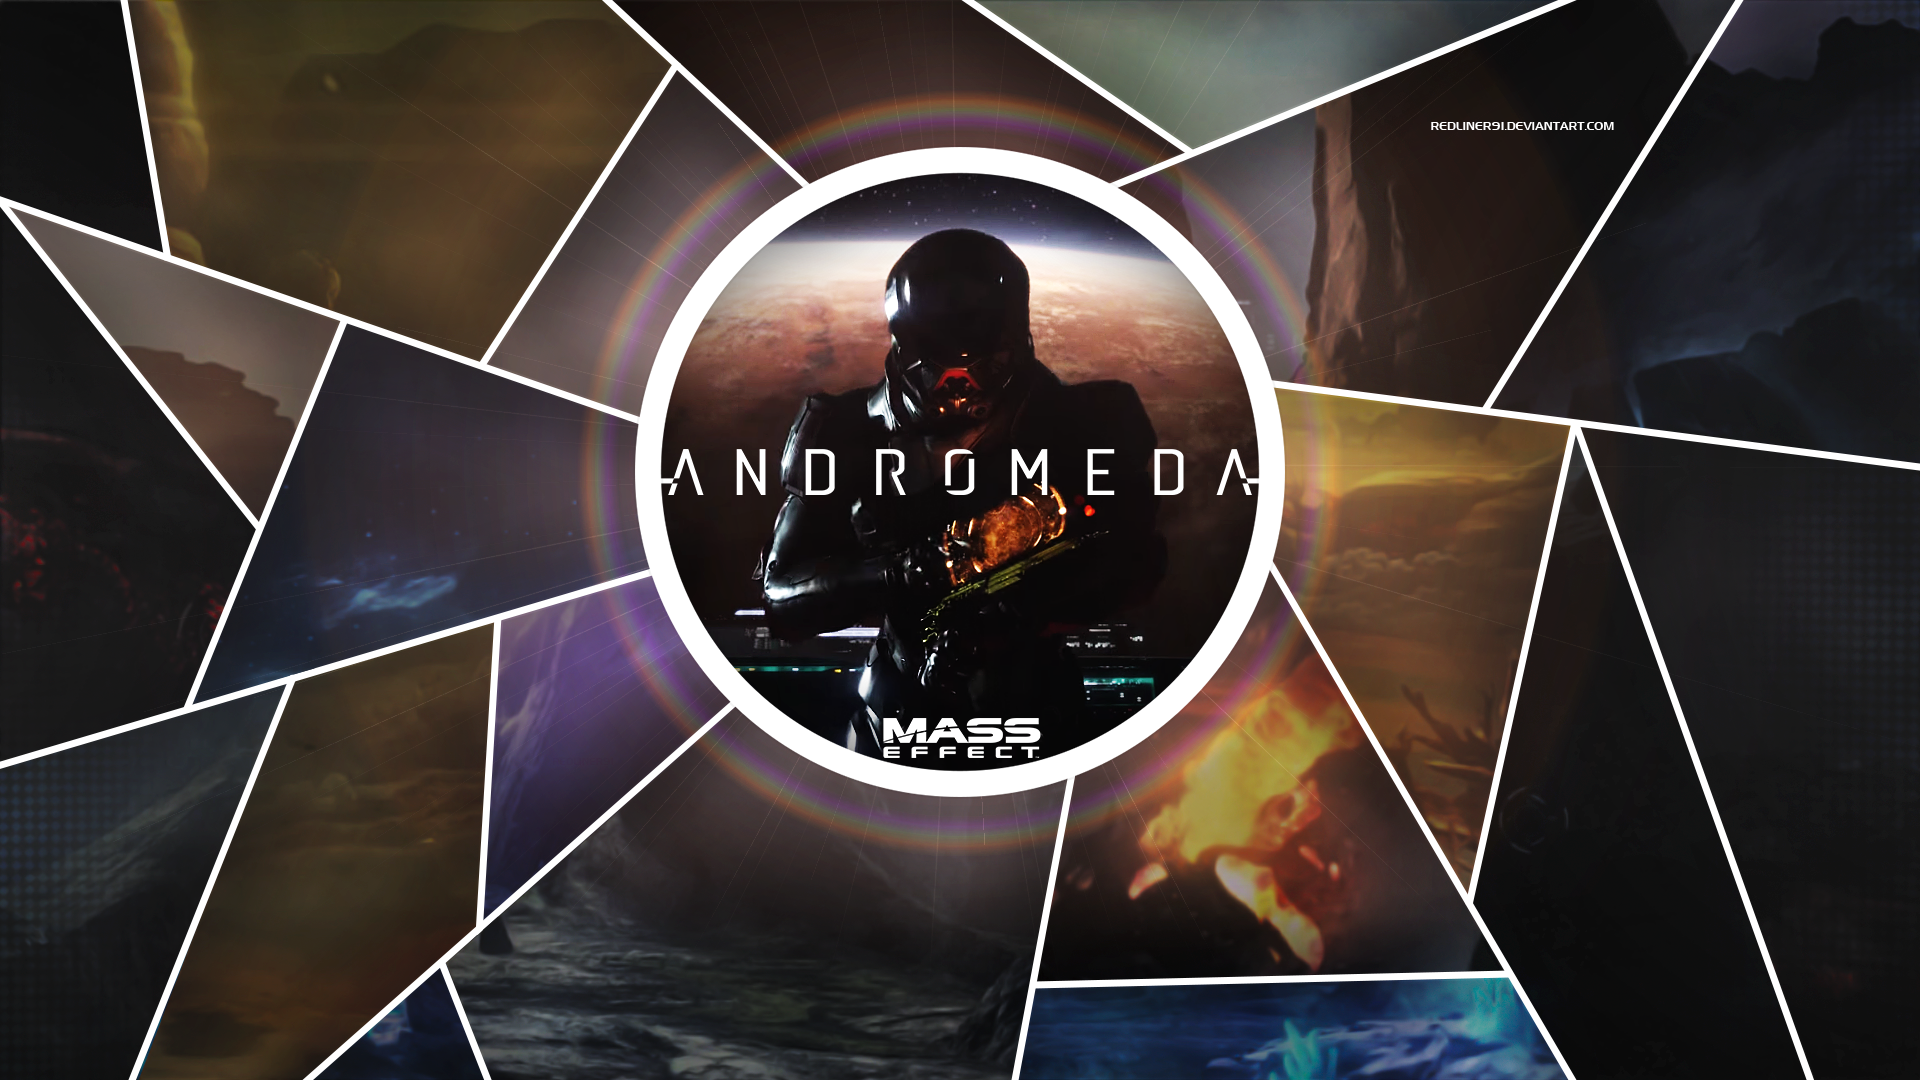 Mass Effect Andromeda Wallpaper 2 By Redliner91 On Deviantart